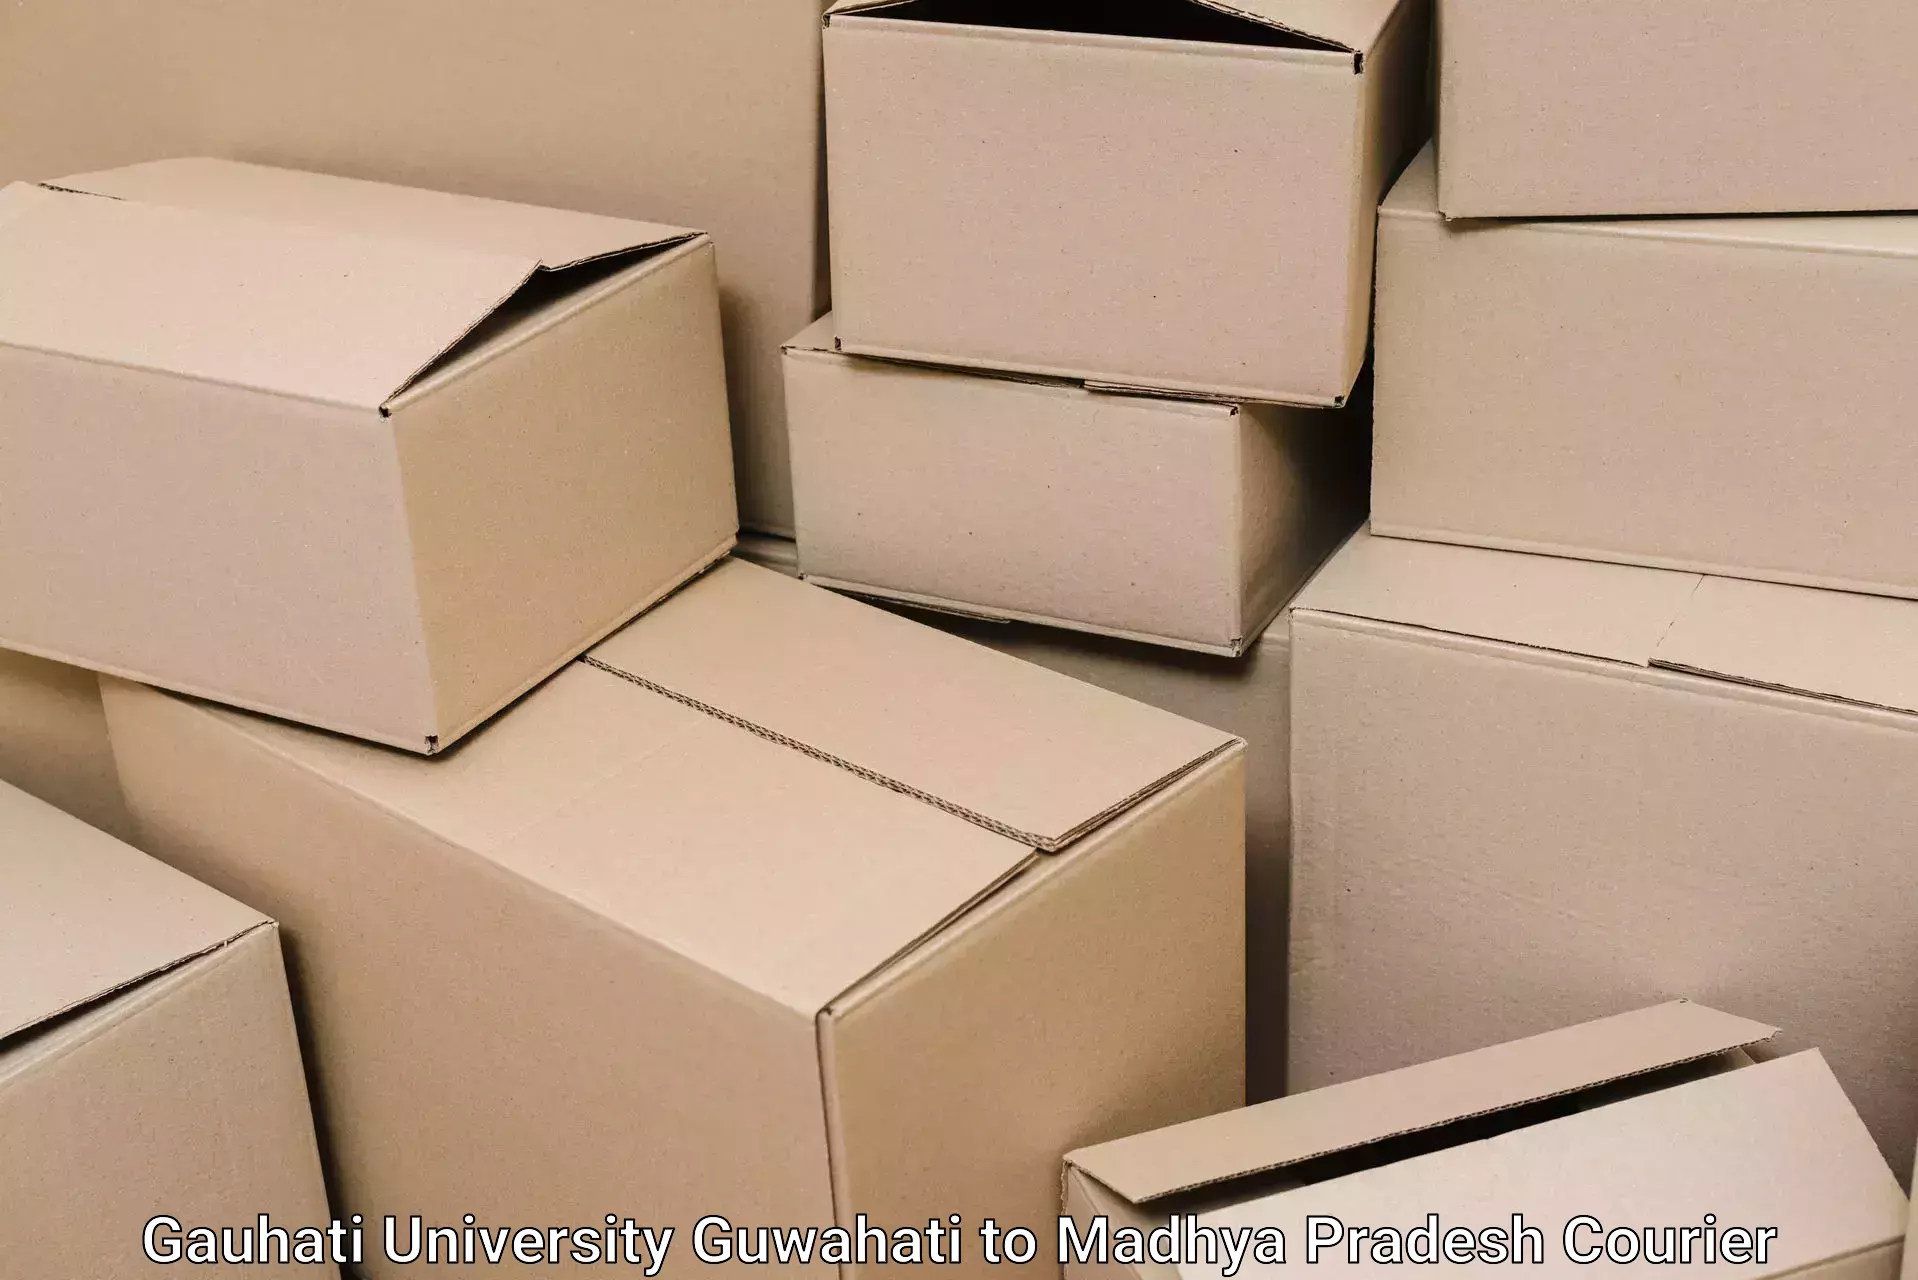 Quality moving company Gauhati University Guwahati to Madhya Pradesh